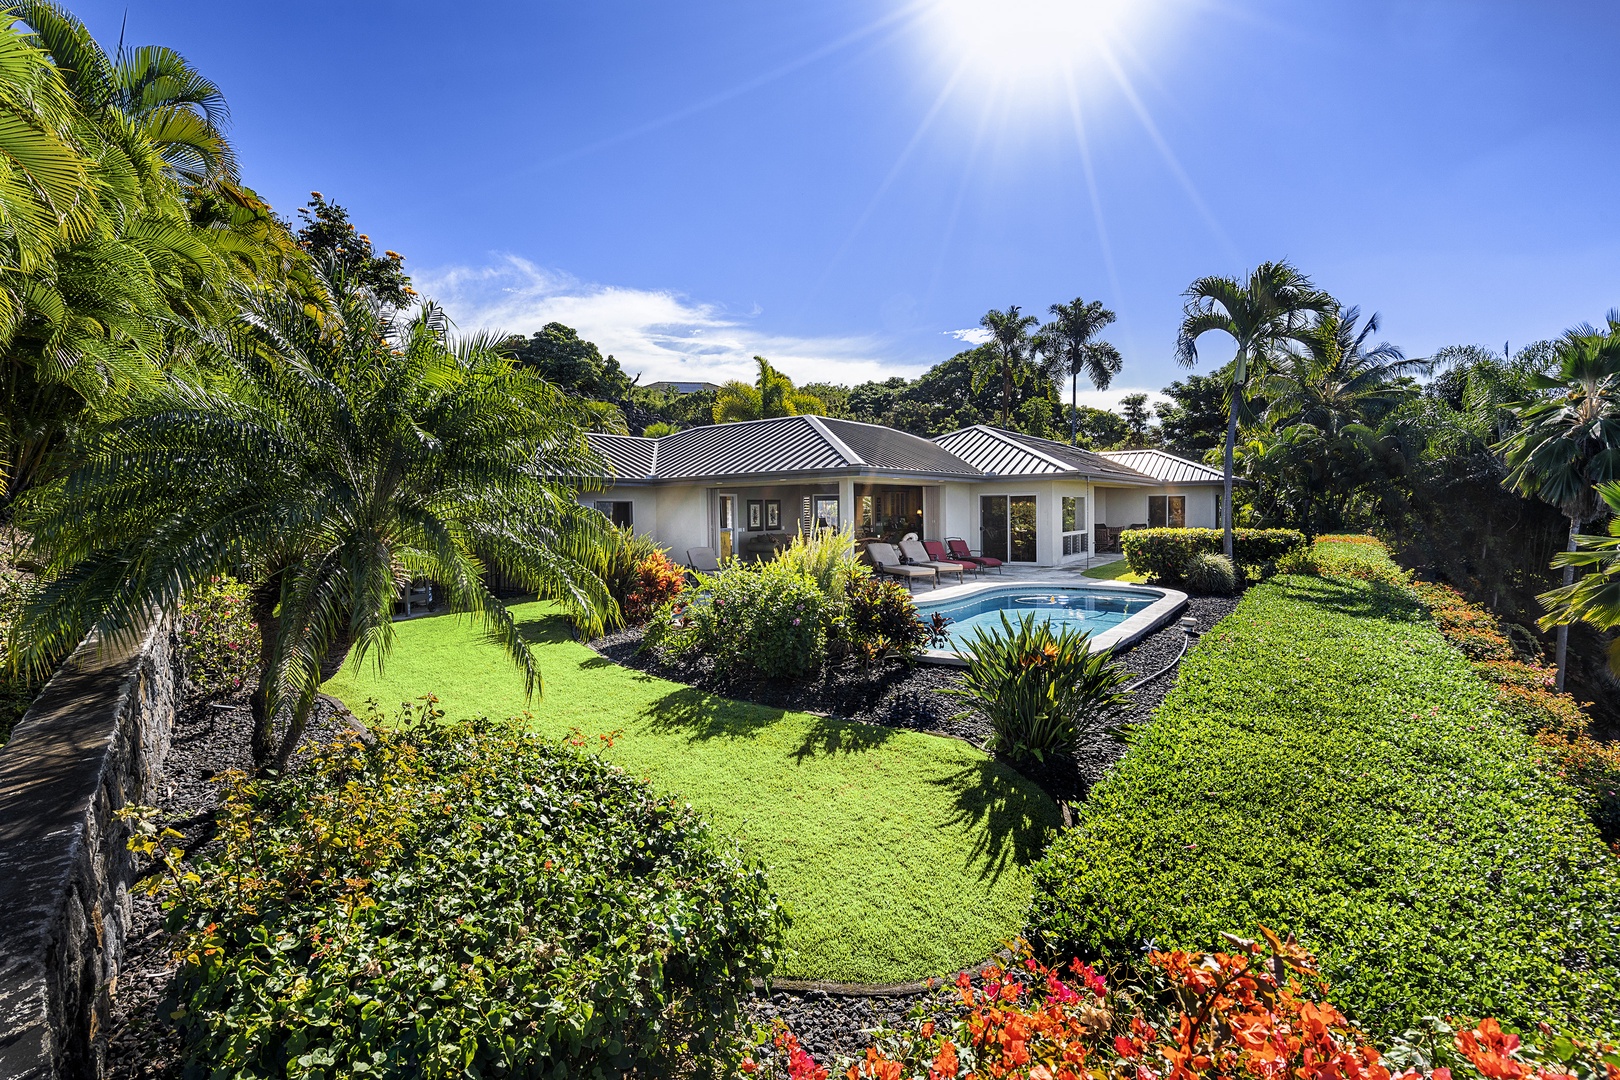 Kailua Kona Vacation Rentals, Hale Aikane - From the Northeast corner of the property